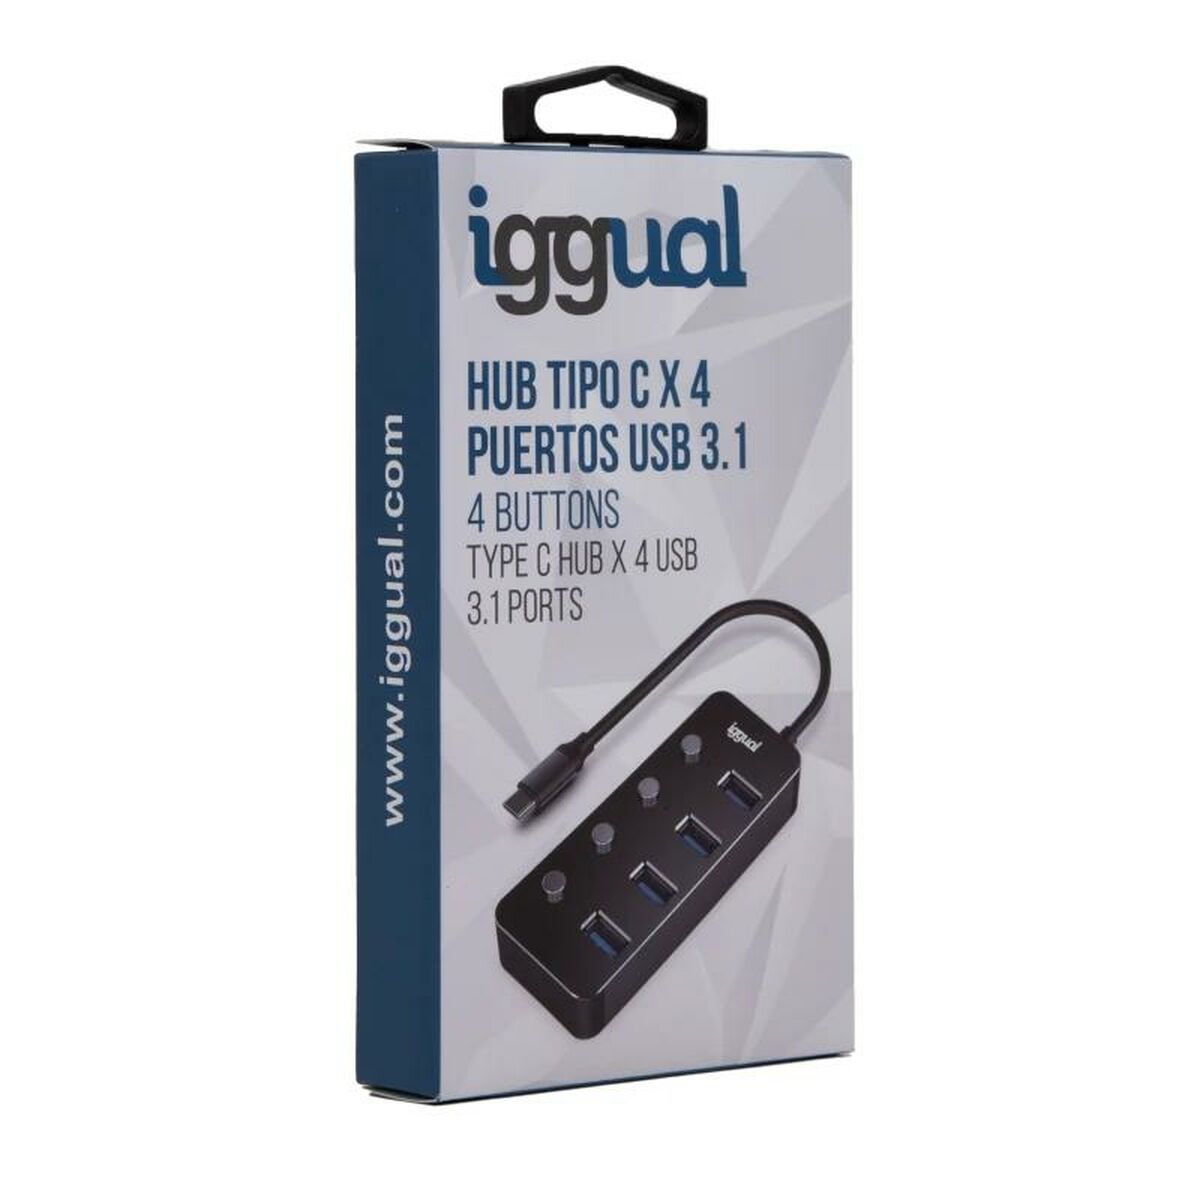 USB Hub iggual IGG318485, iggual, Computing, Accessories, usb-hub-iggual-igg318485, Brand_iggual, category-reference-2609, category-reference-2803, category-reference-2829, category-reference-t-19685, category-reference-t-19908, Condition_NEW, networks/wiring, Price_20 - 50, Teleworking, RiotNook